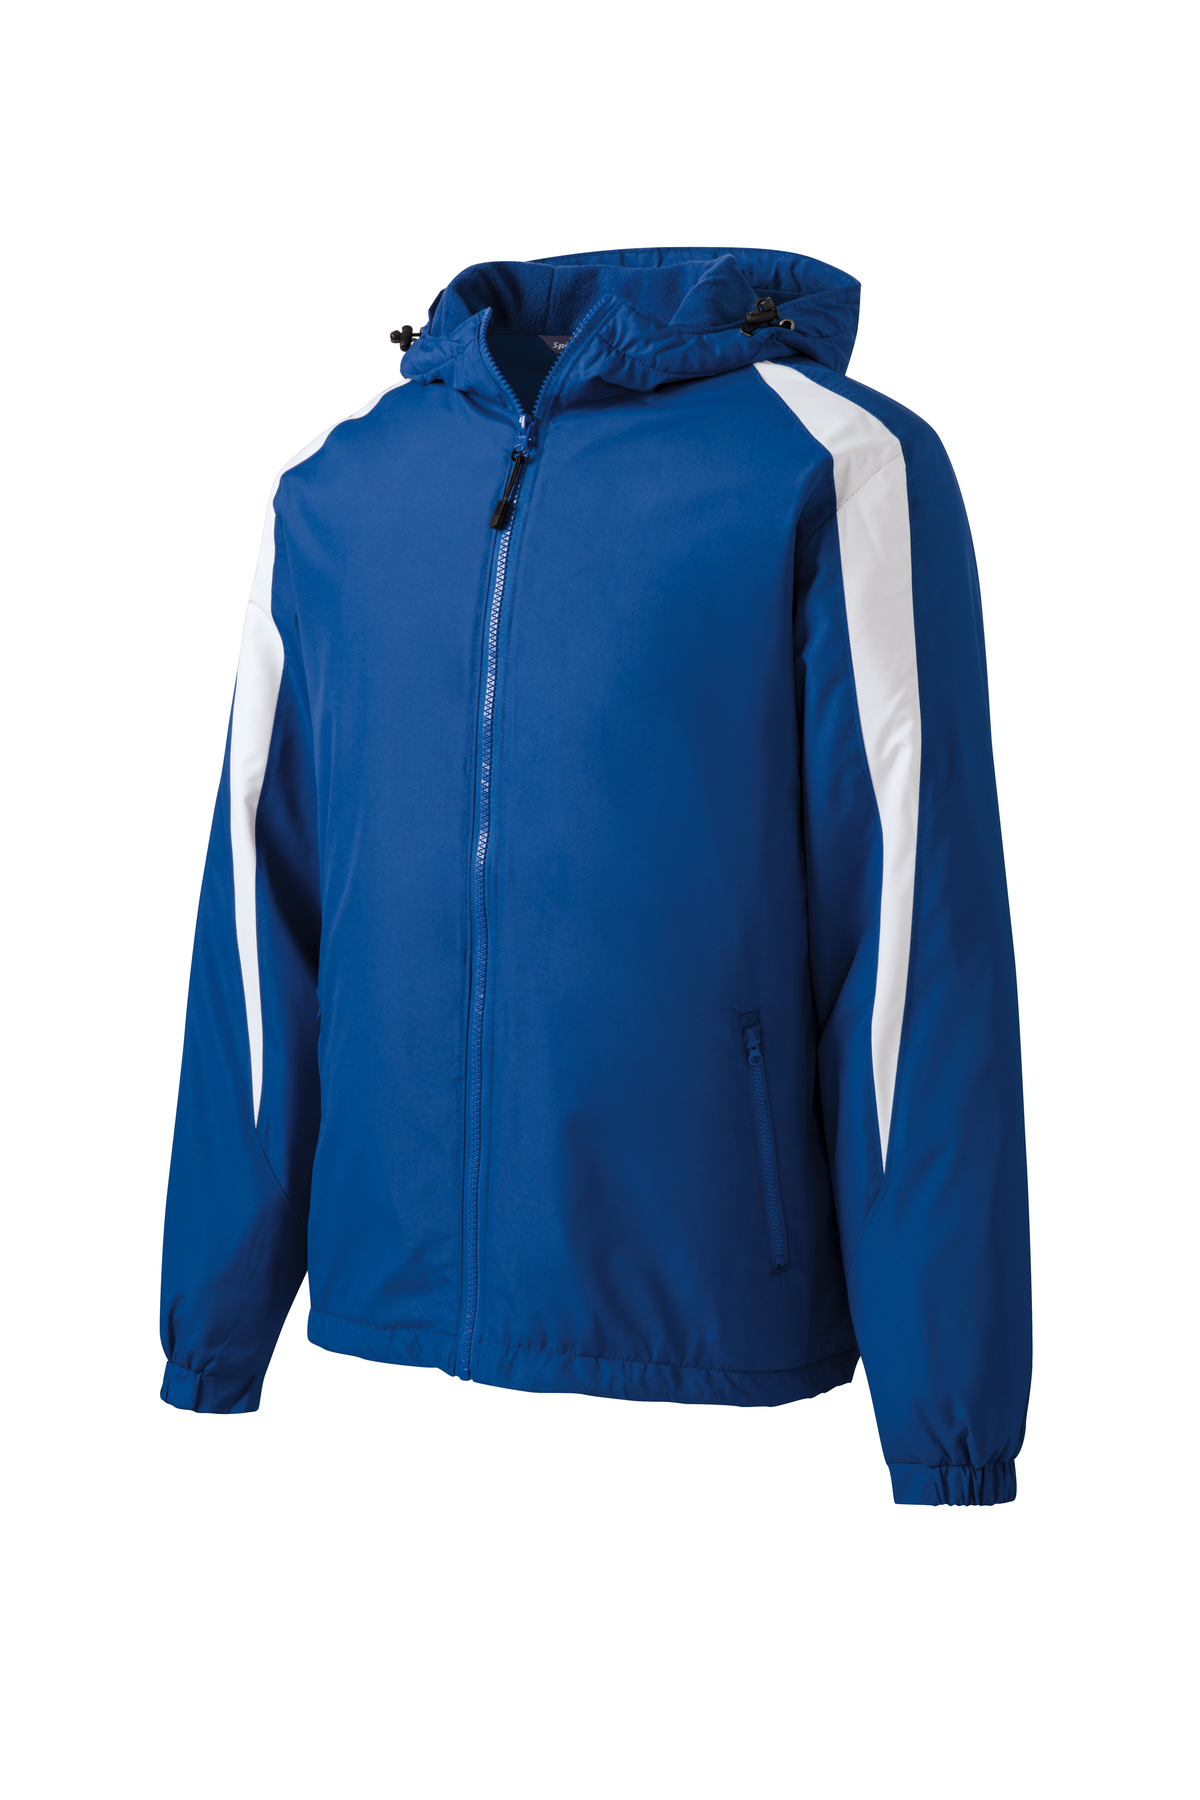 Sport-Tek Fleece-Lined Colorblock Jacket | Product | Sport-Tek